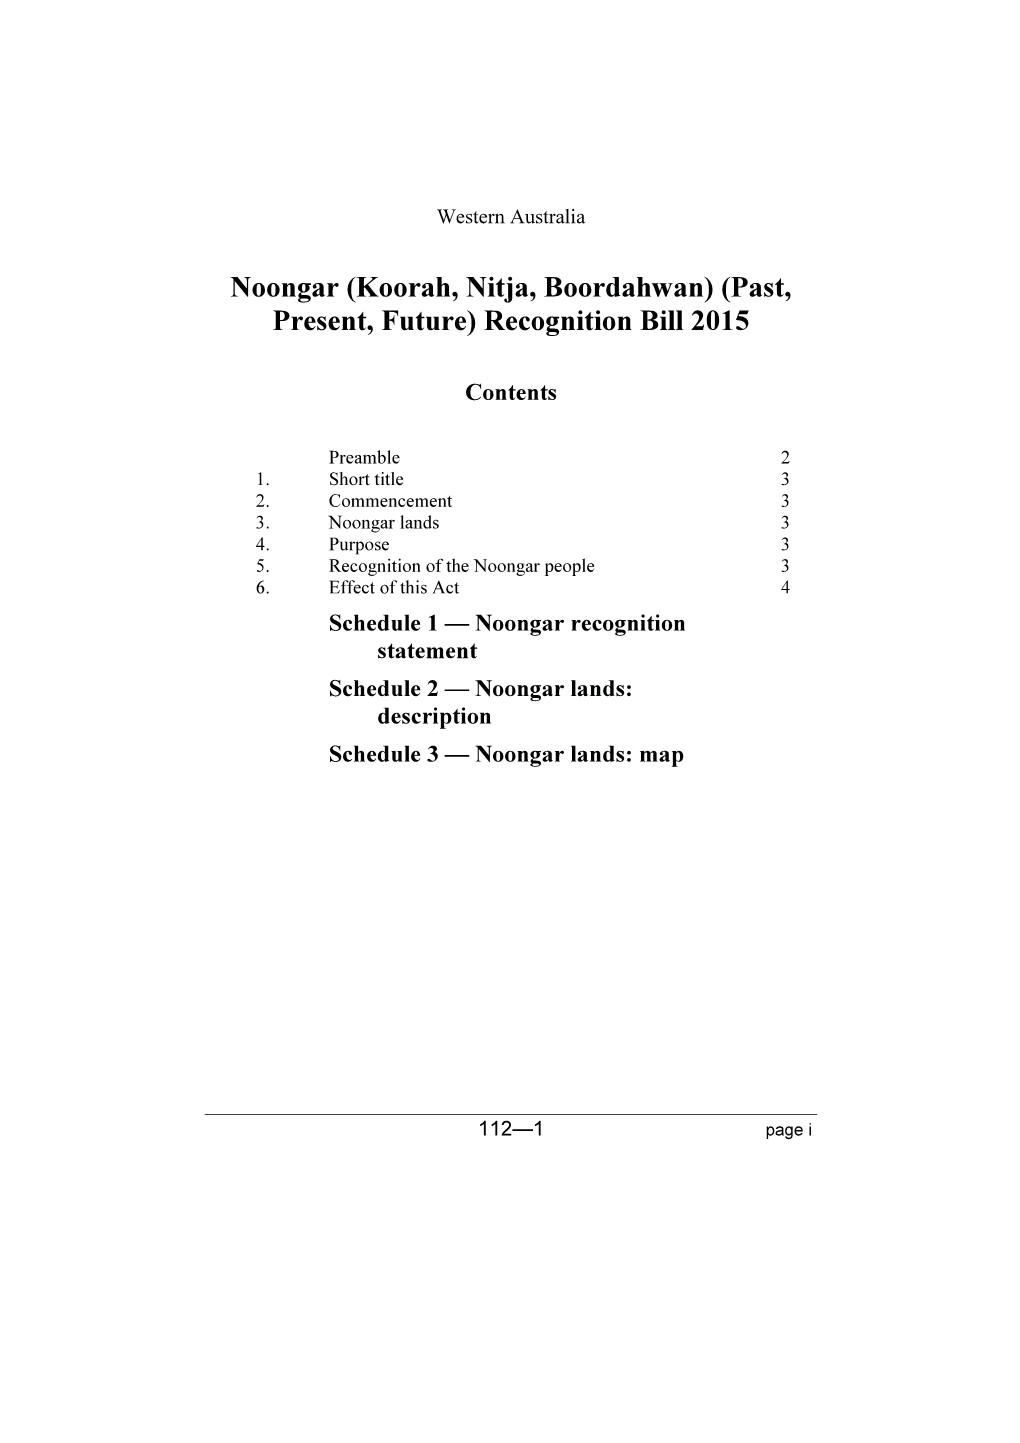 Noongar (Koorah, Nitja, Boordahwan) (Past, Present, Future) Recognition Bill 2015